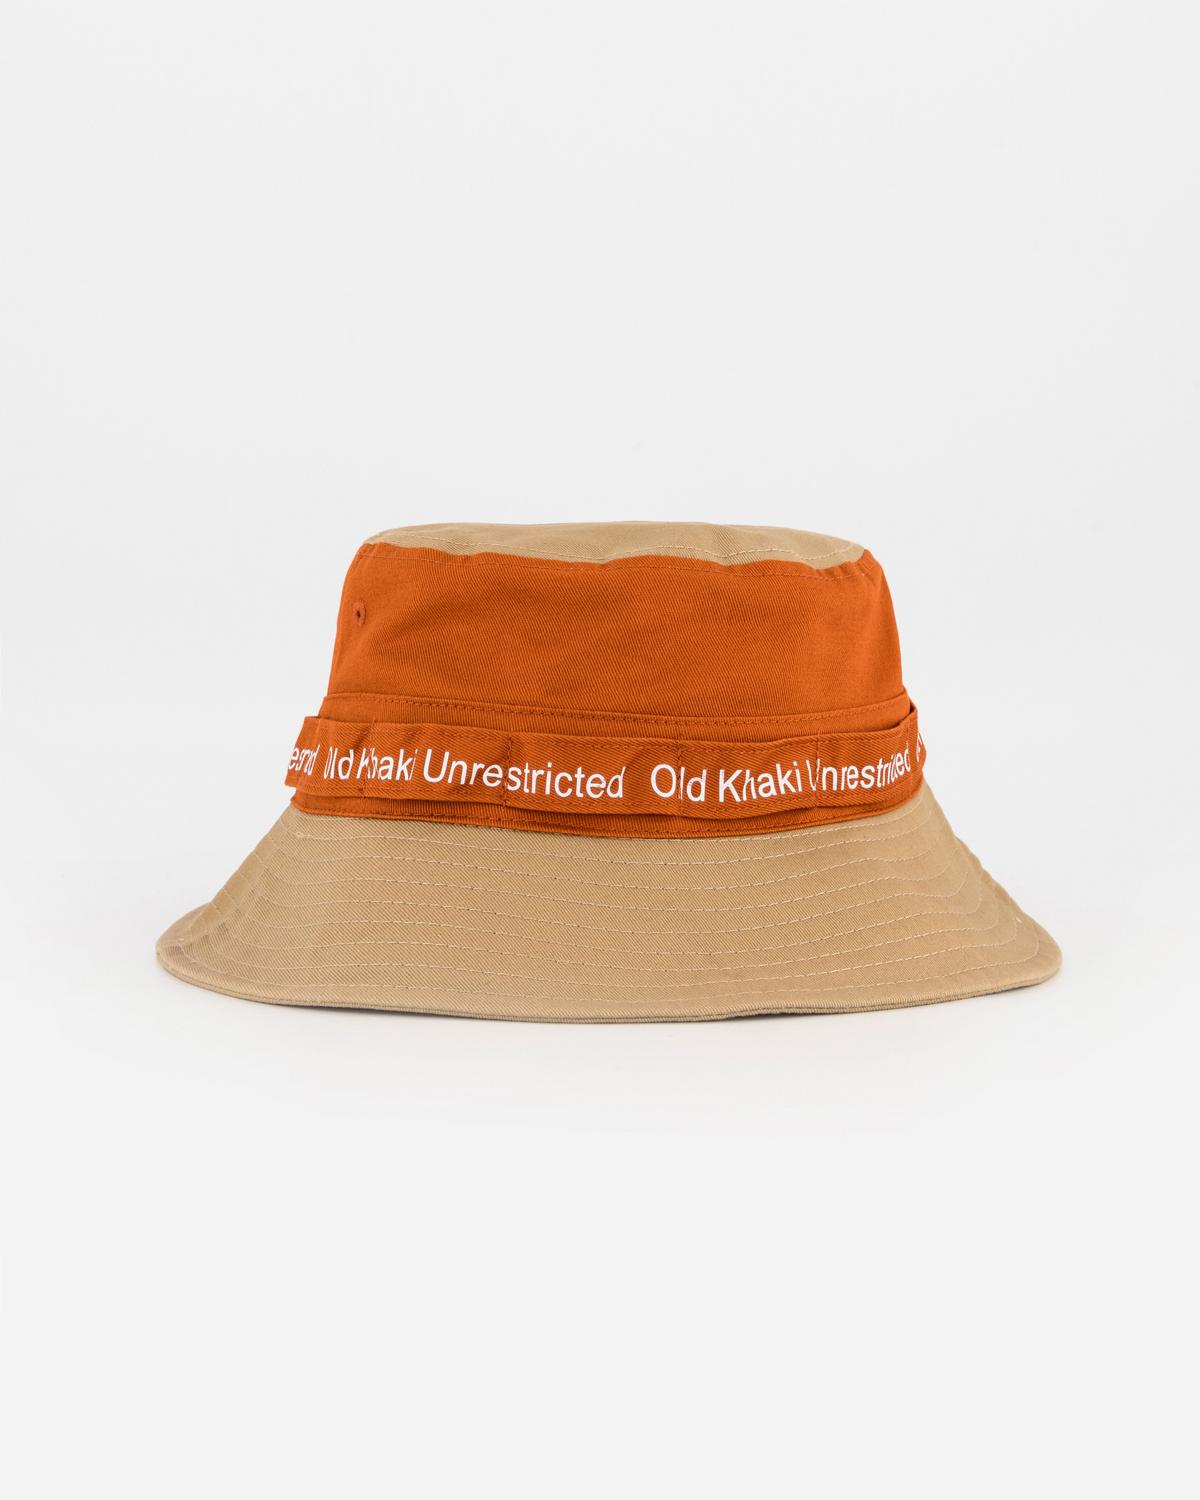 Old Khaki Benni Fisherman’s Bucket Hat | Cape Union Mart